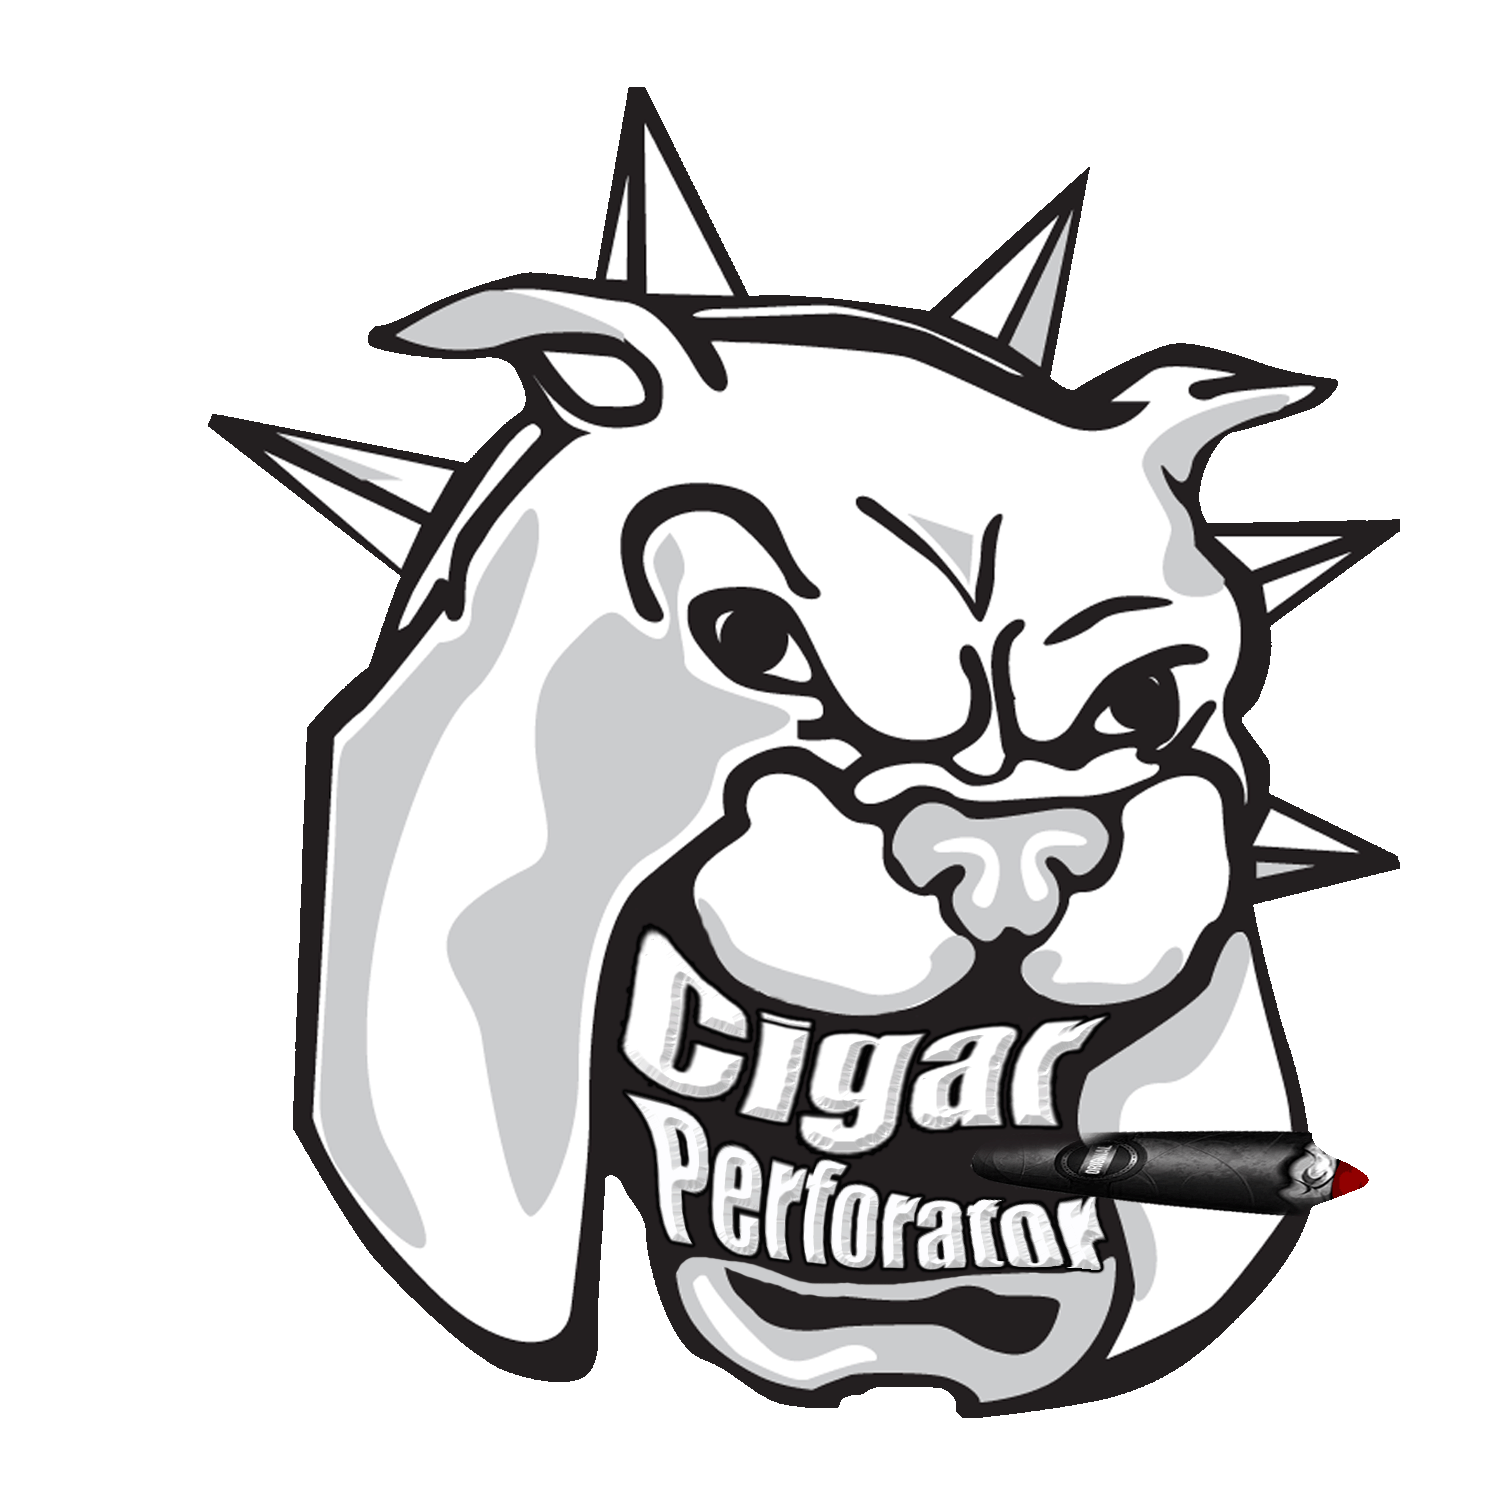 Cigar clipart drawing. Perforator contact us 